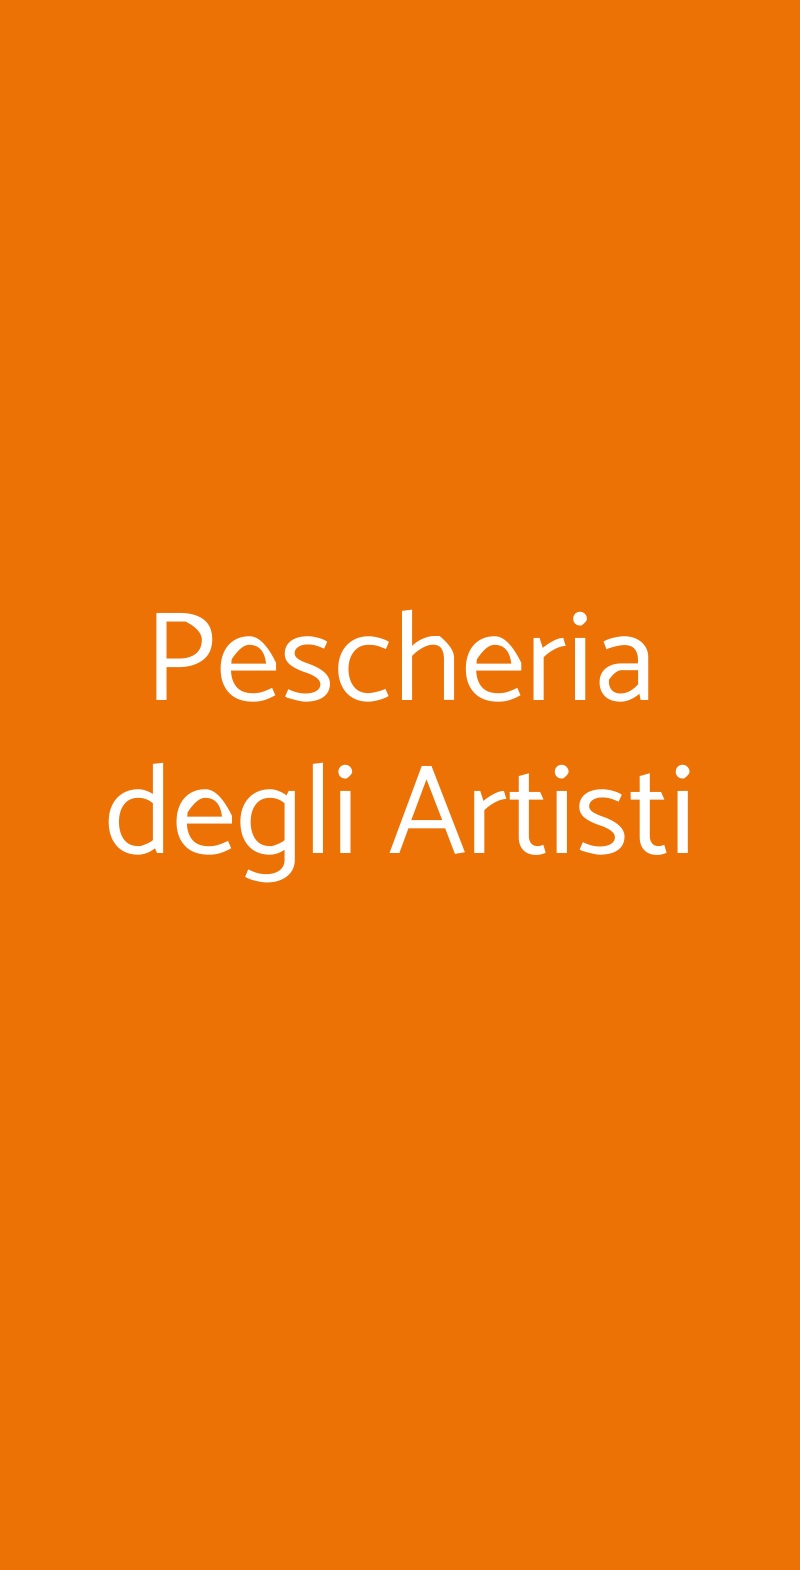 Pescheria degli Artisti Albissola Marina menù 1 pagina